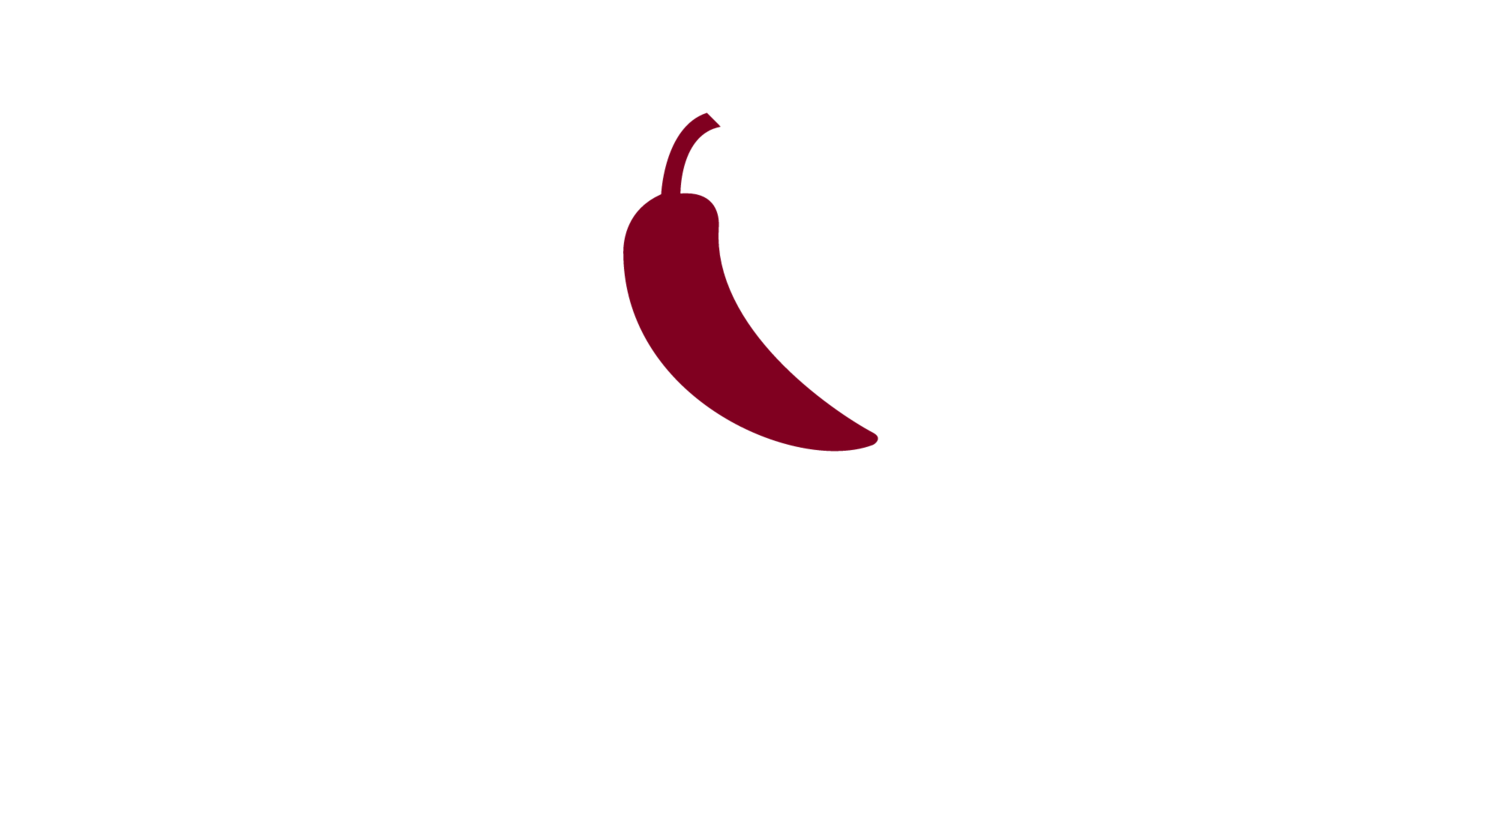 Yeti Spice Grill